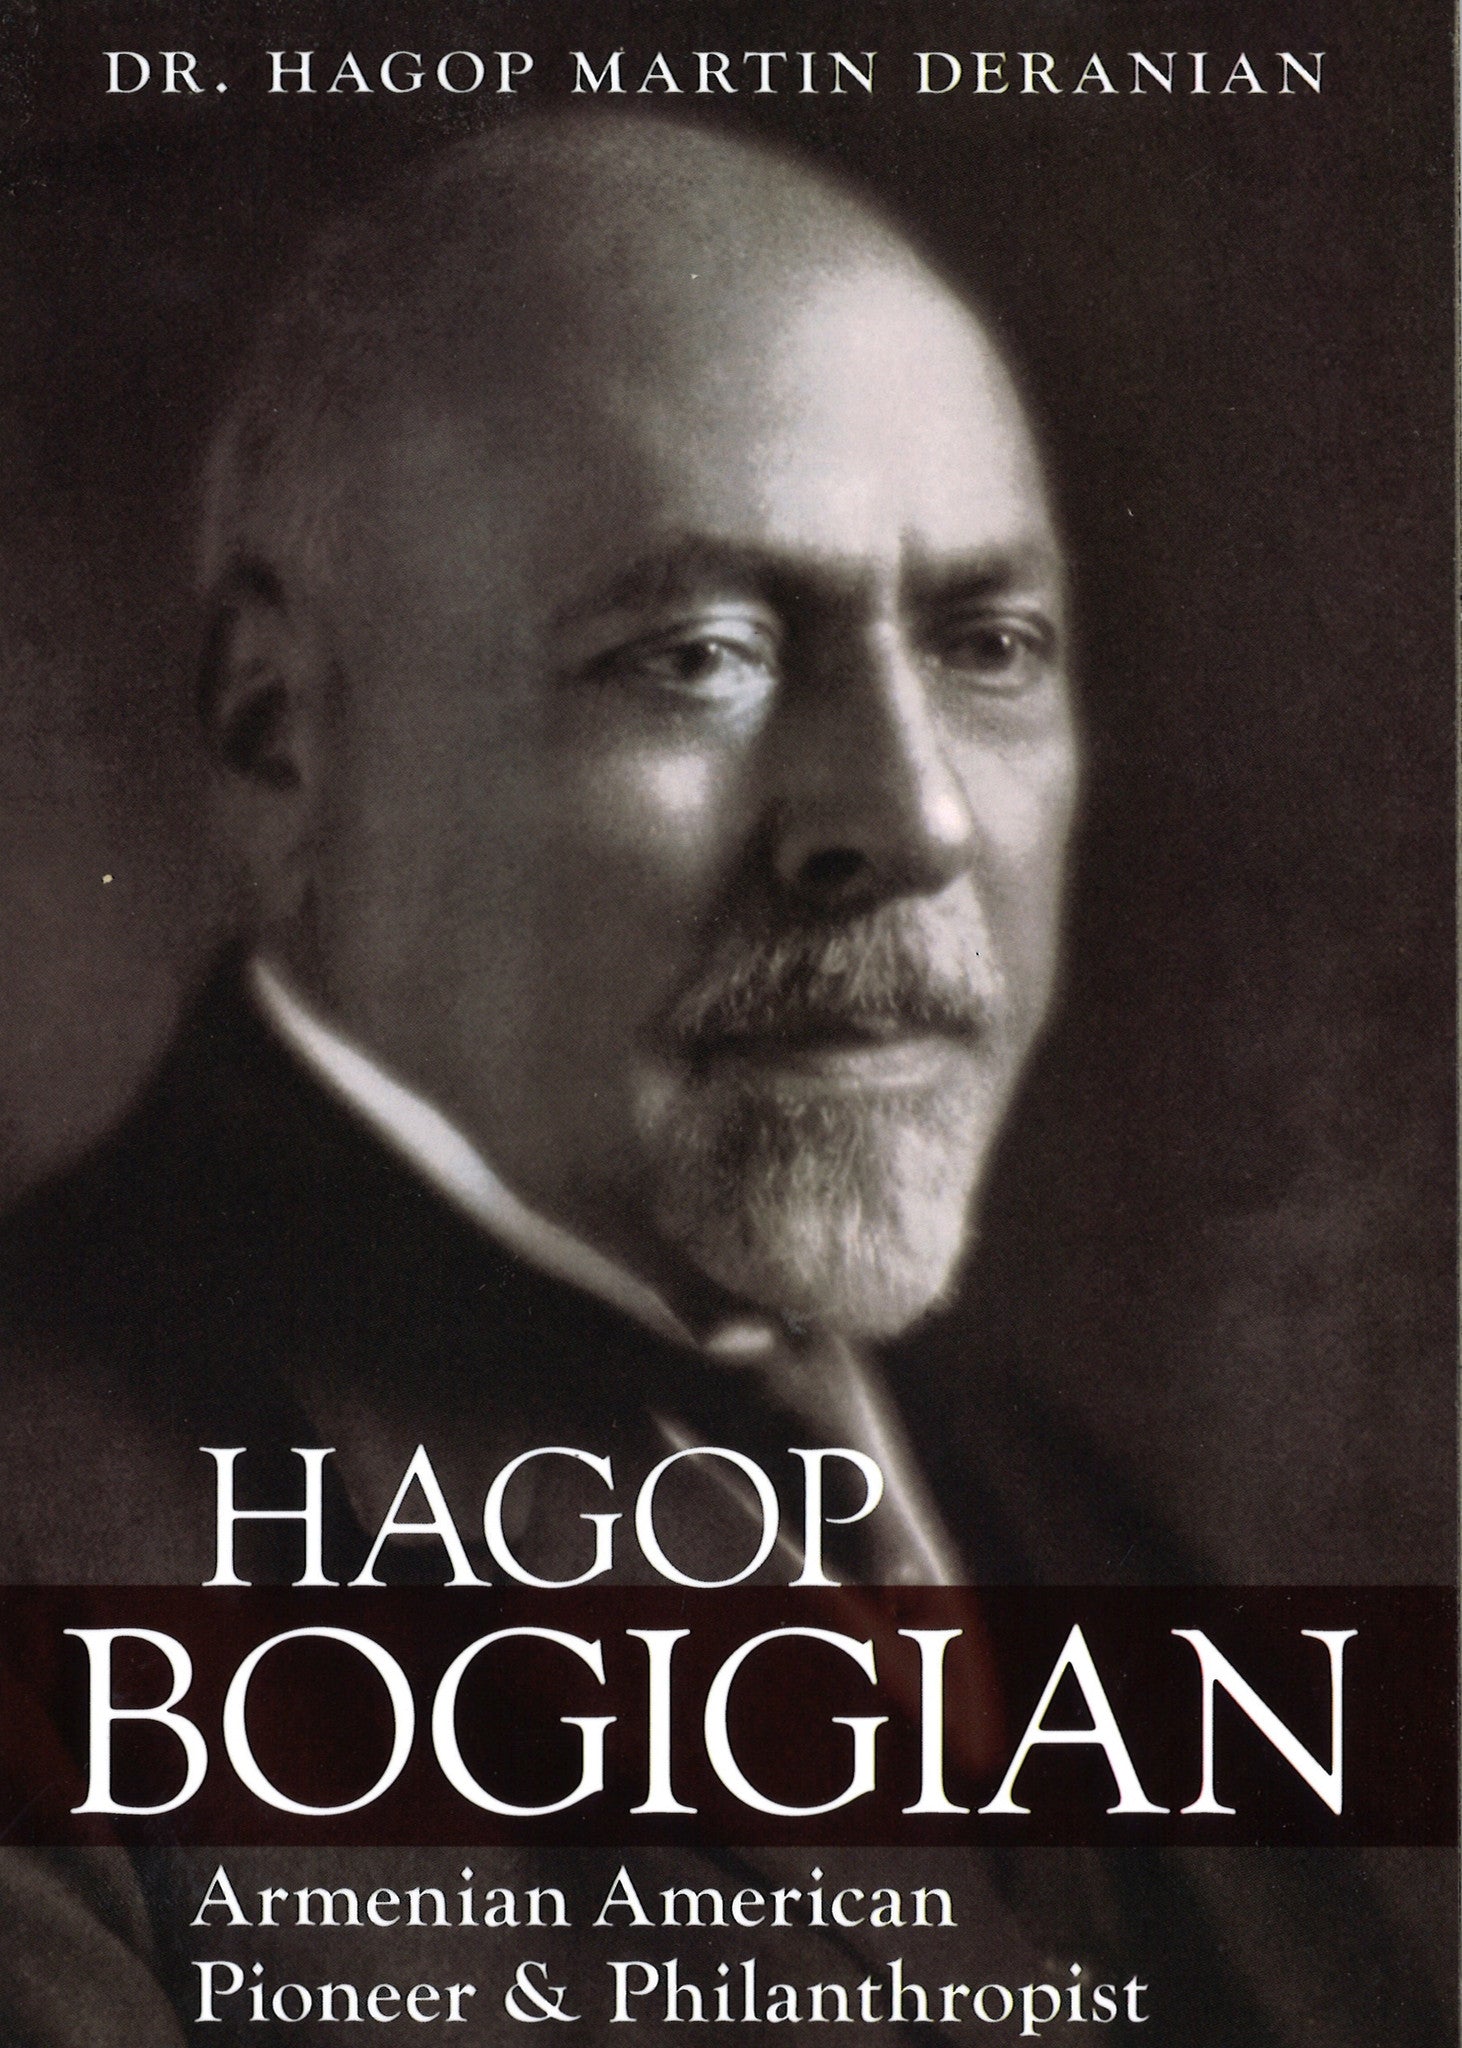 HAGOP BOGIGIAN: Armenian American Pioneer & Philanthropist